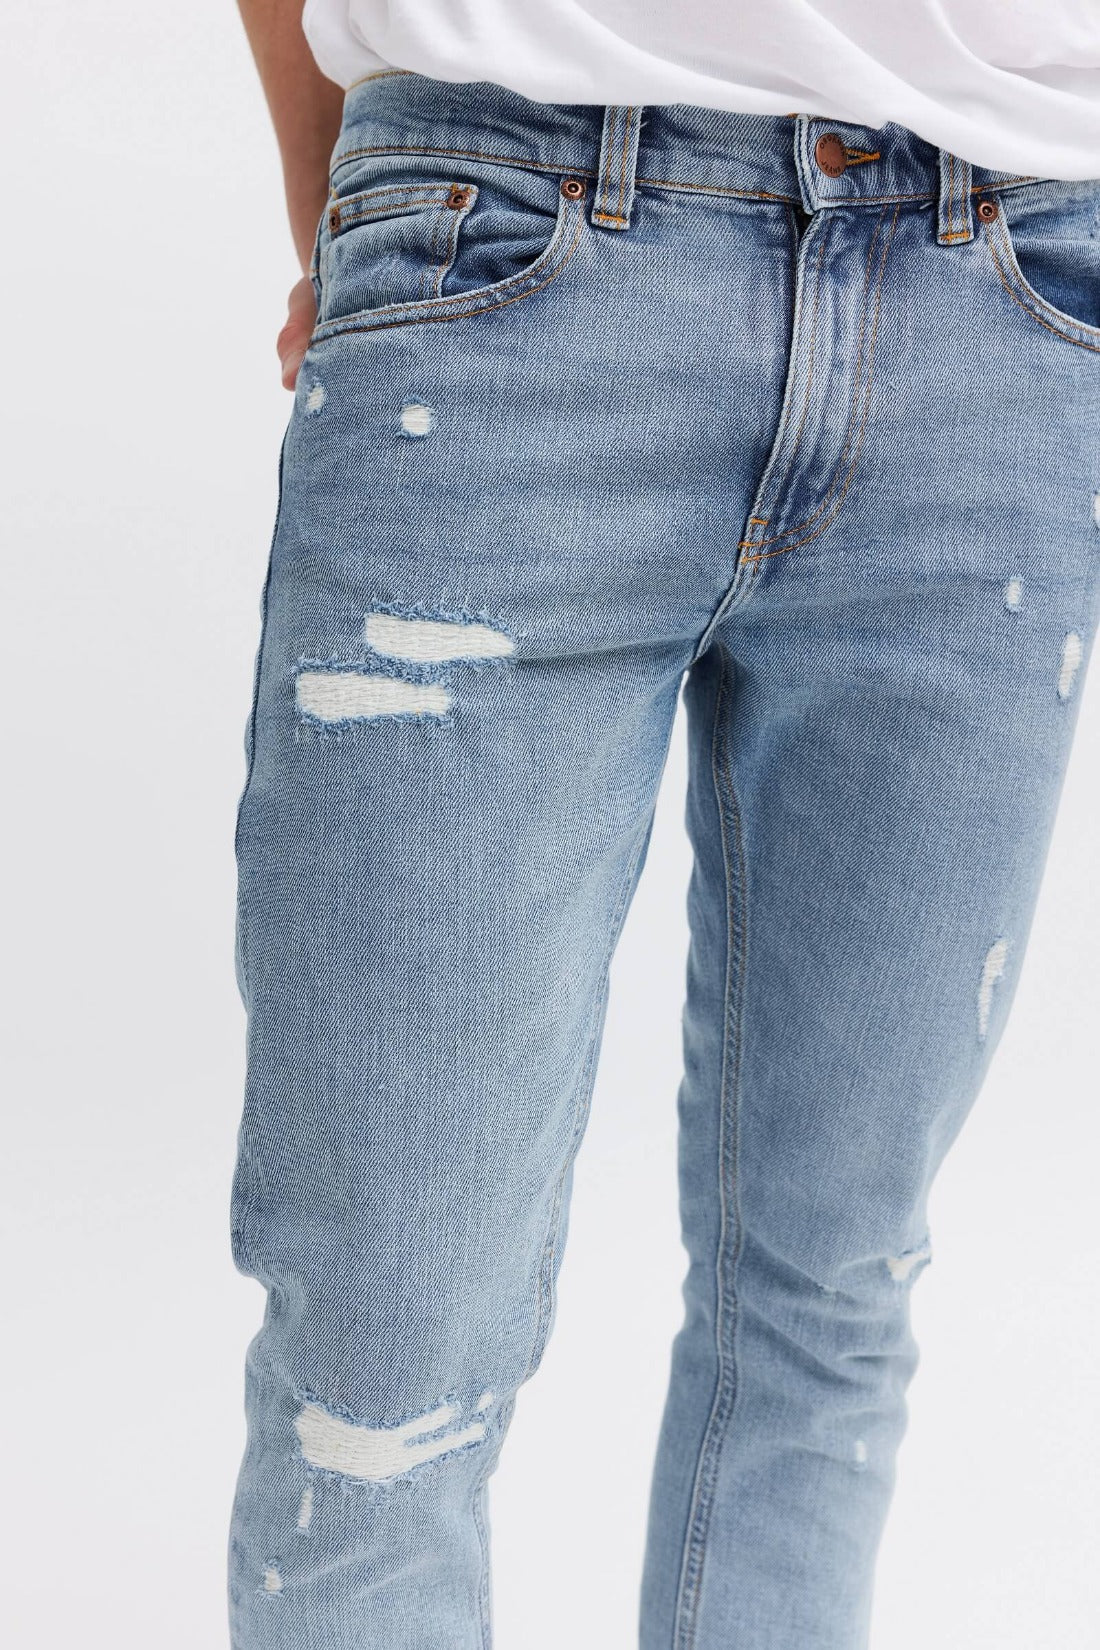 ethical denim, torn jeans 